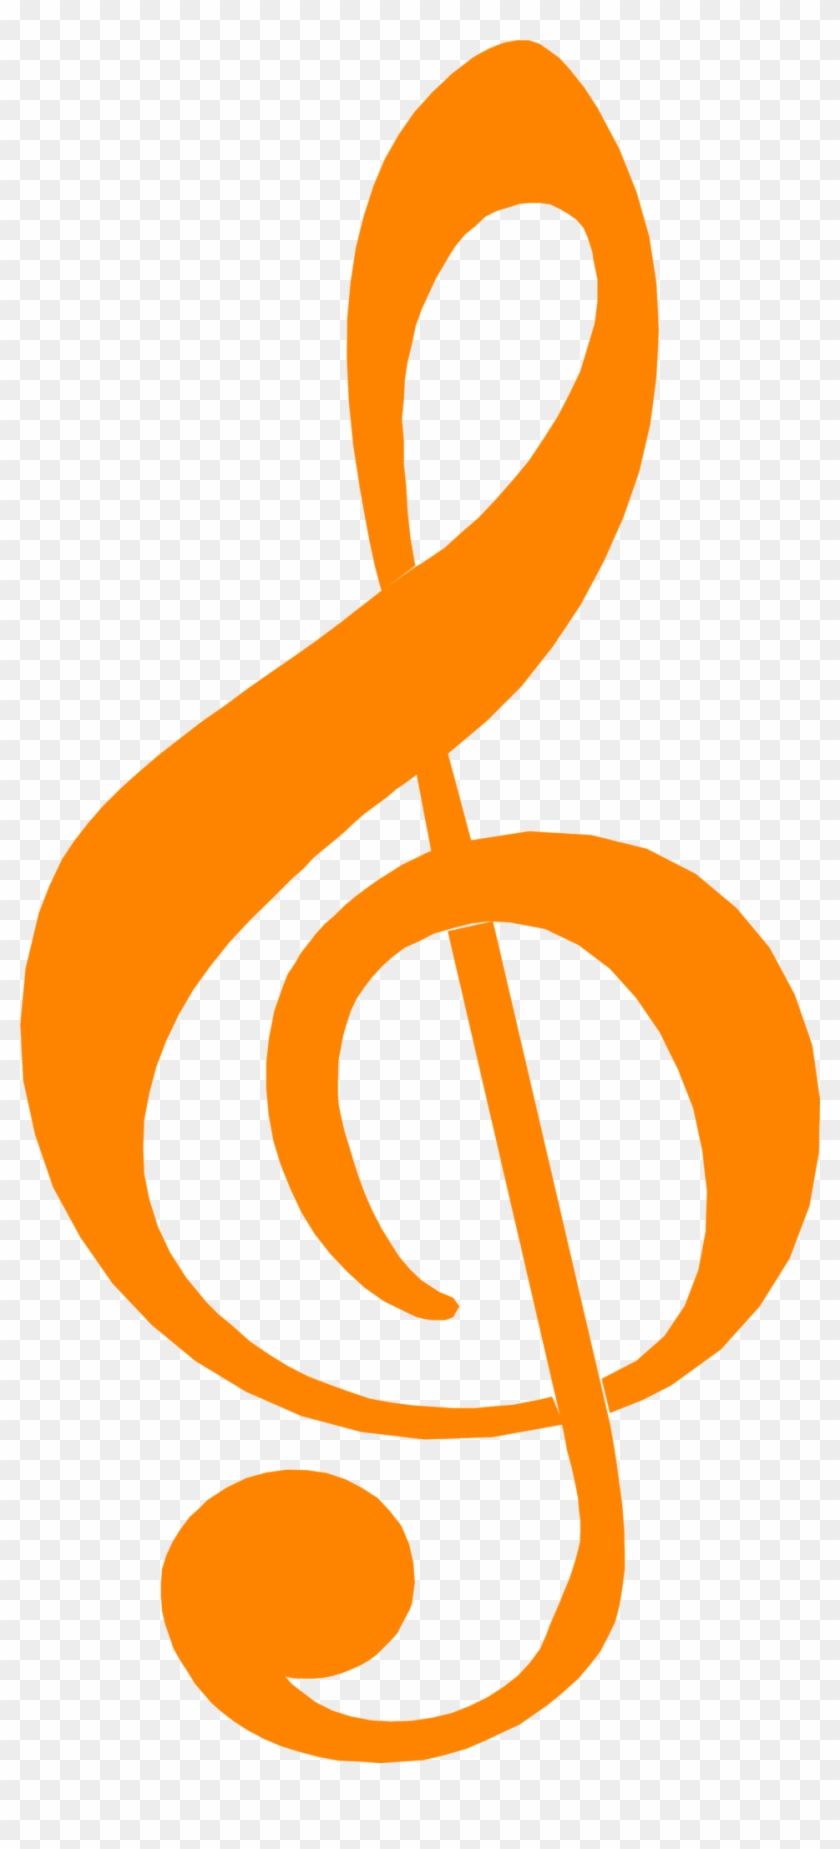 Treble Clef Free Stock Photo Illustration Of An Orange - Clip Art Free Music Symbols #125903